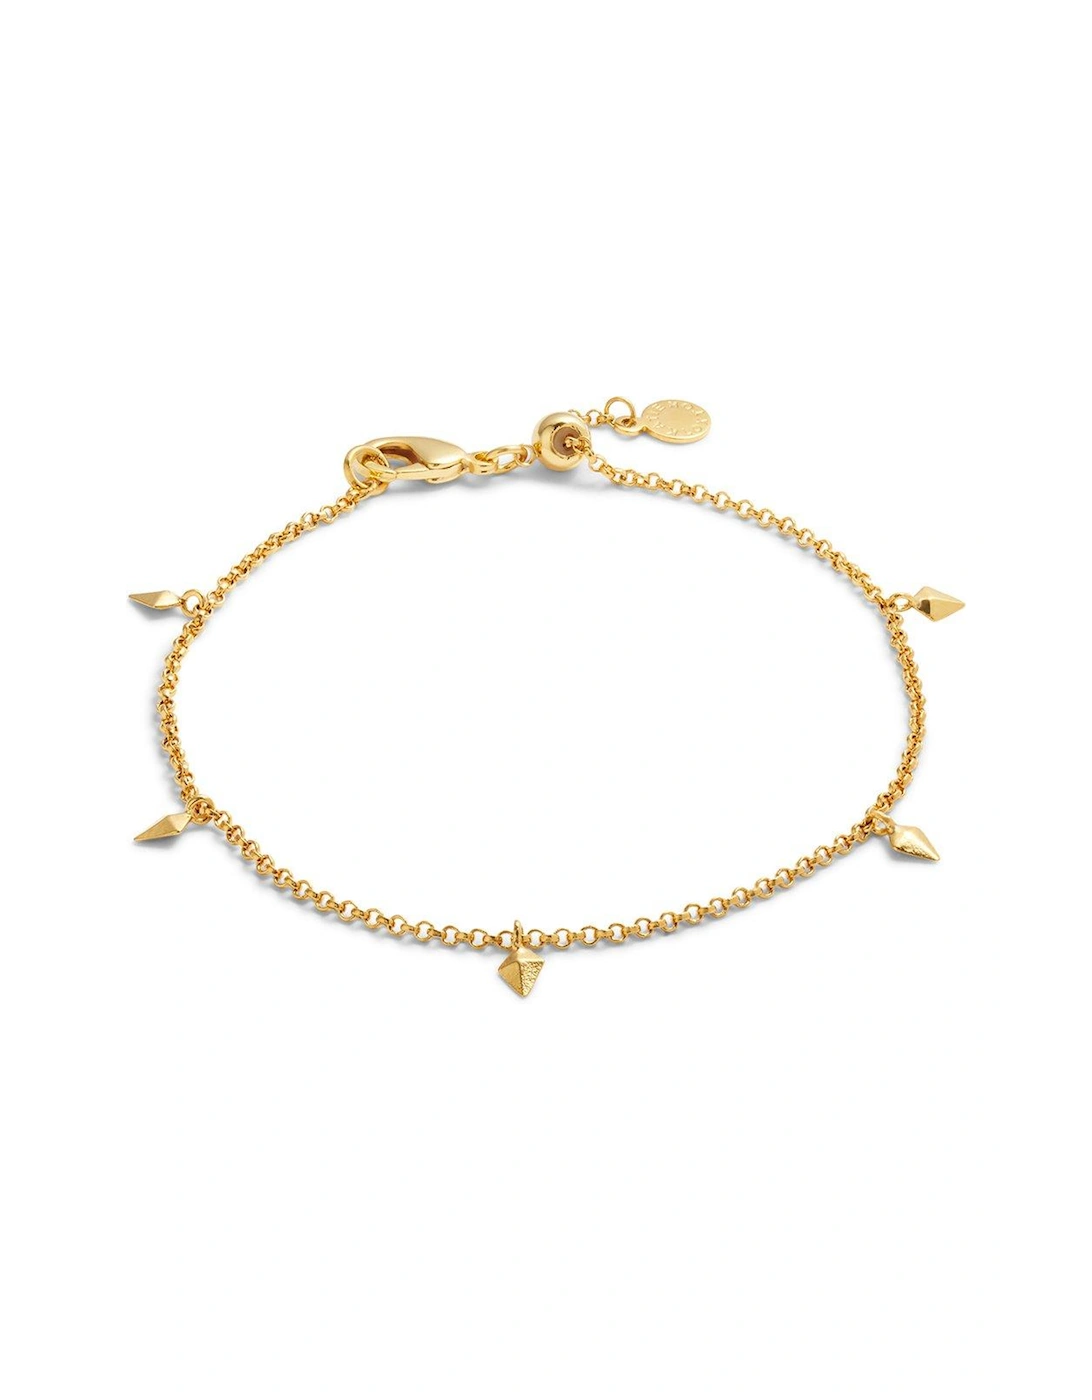 ESTEE BRACELET , Gold , Bracelet , 19cm total length, 2 of 1